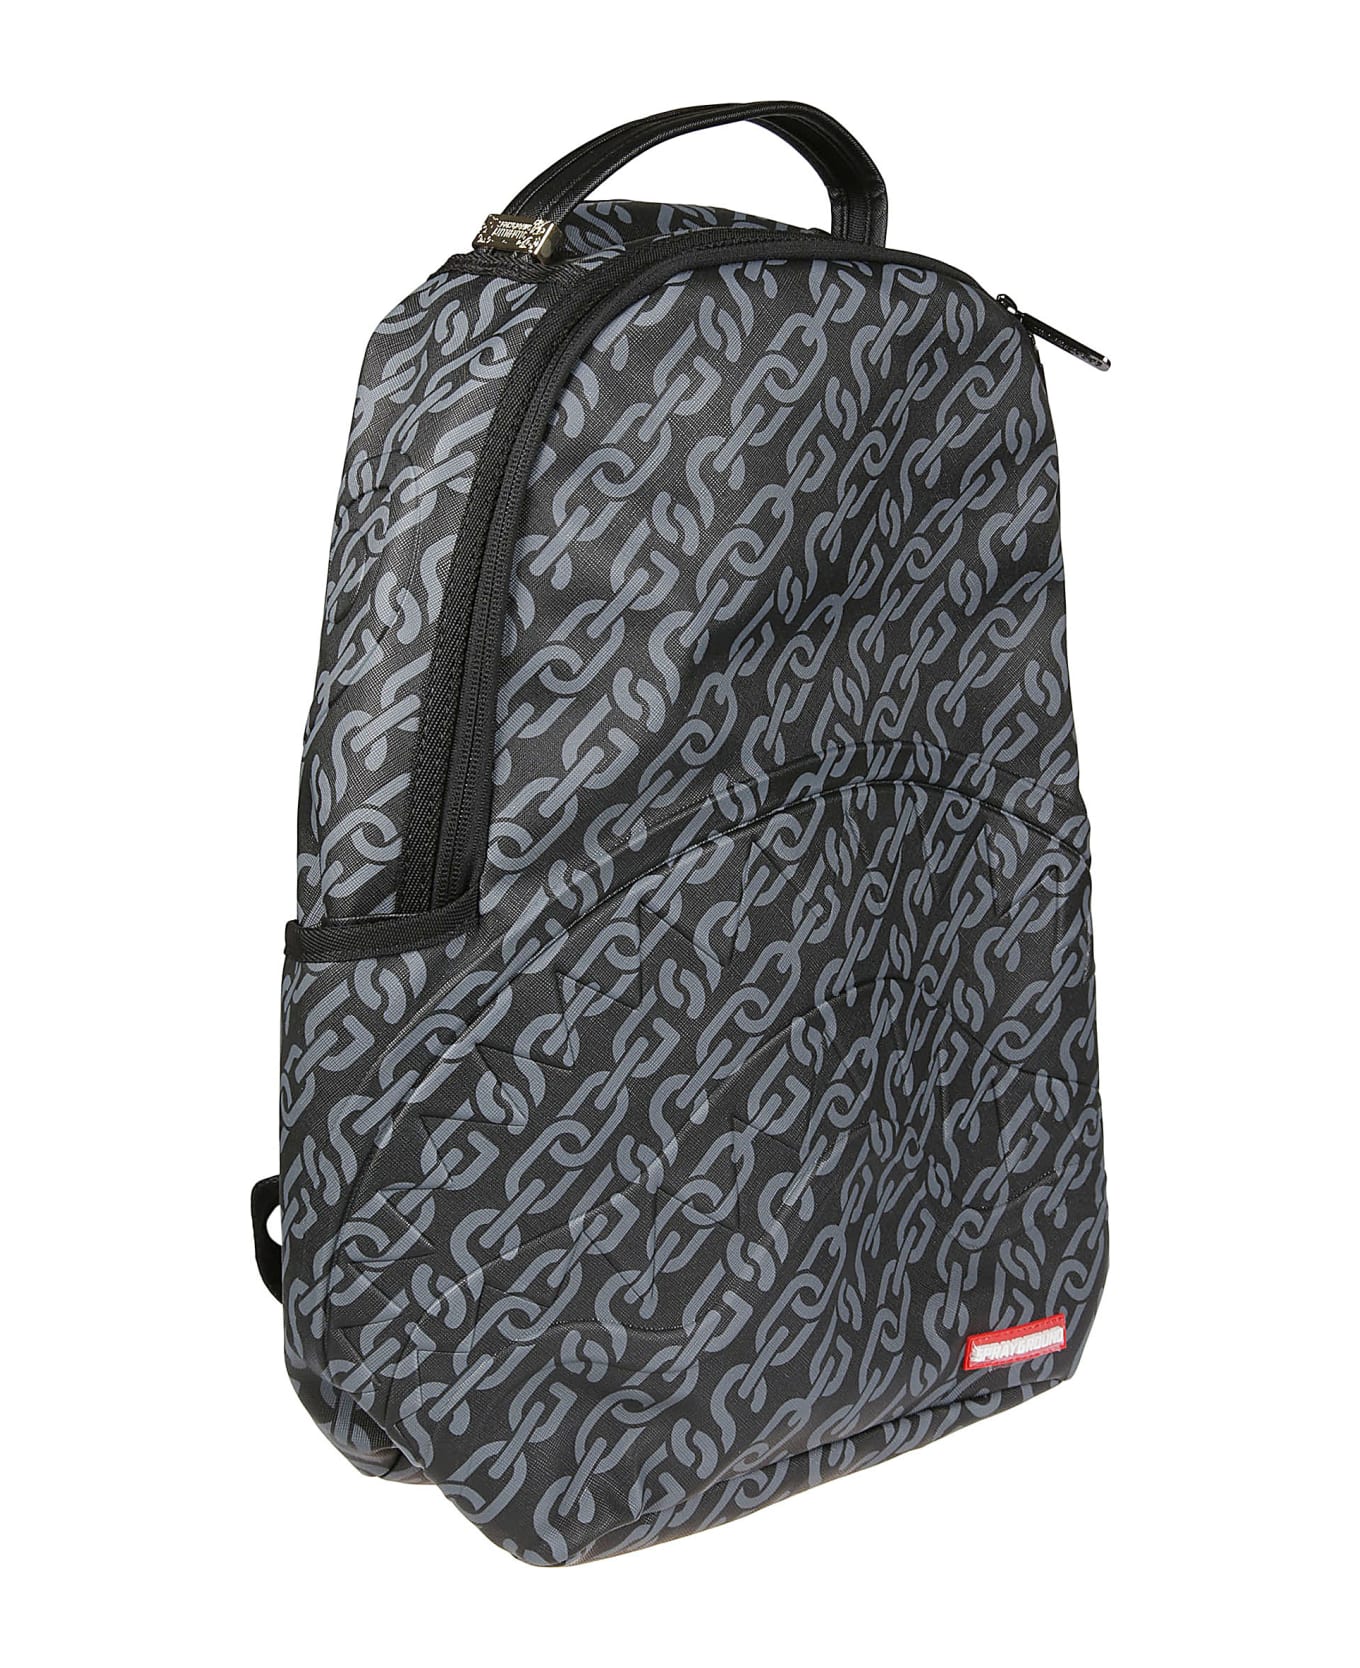 Sprayground Chains Backpack - Nero/grigio